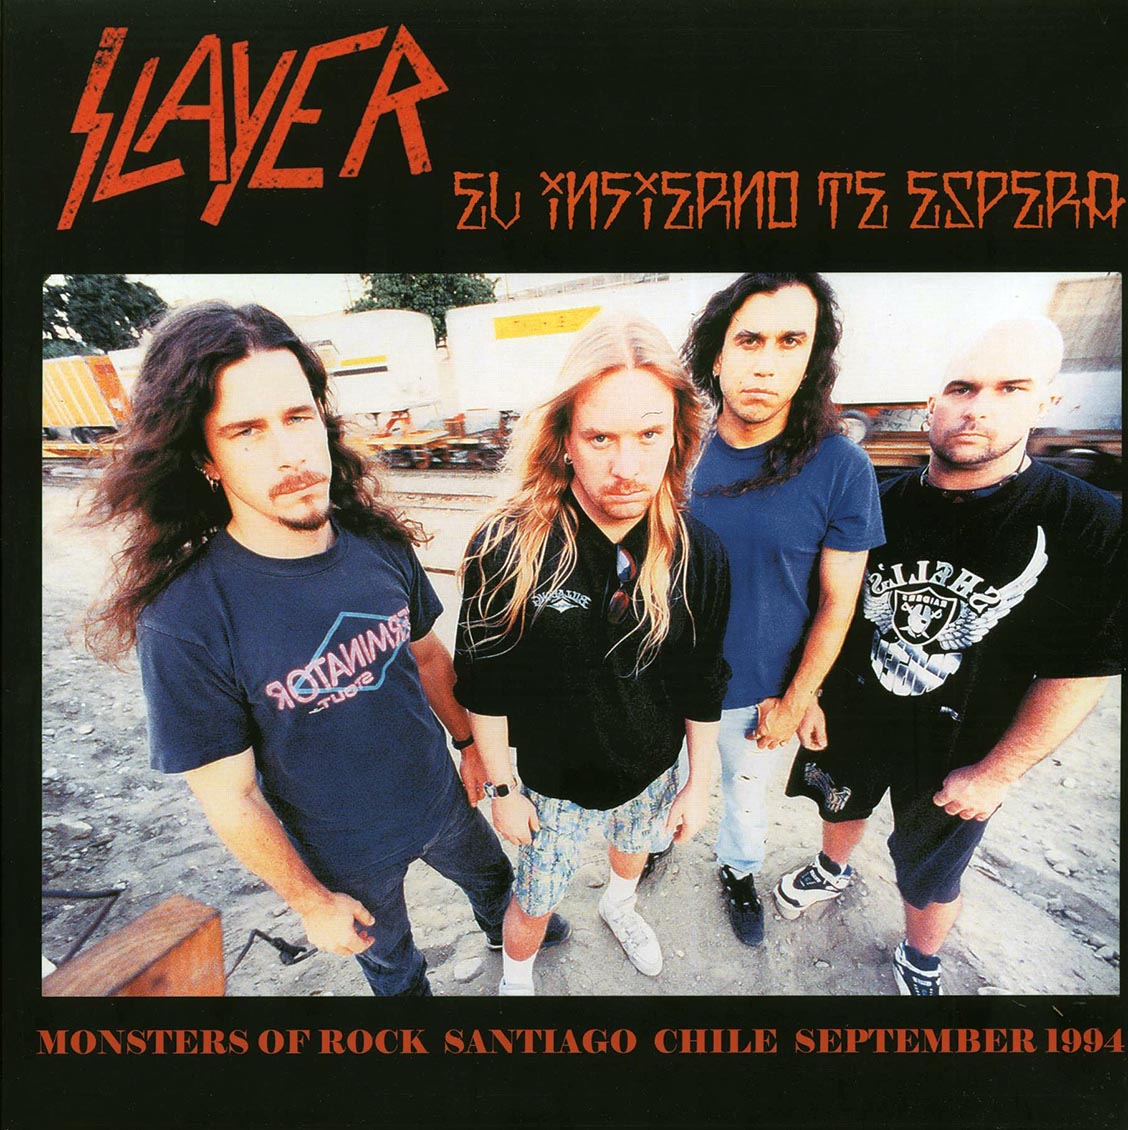 Slayer "El Infierno Te Espara: Monsters Of Rock! Santiago Chile September, 1994" LP